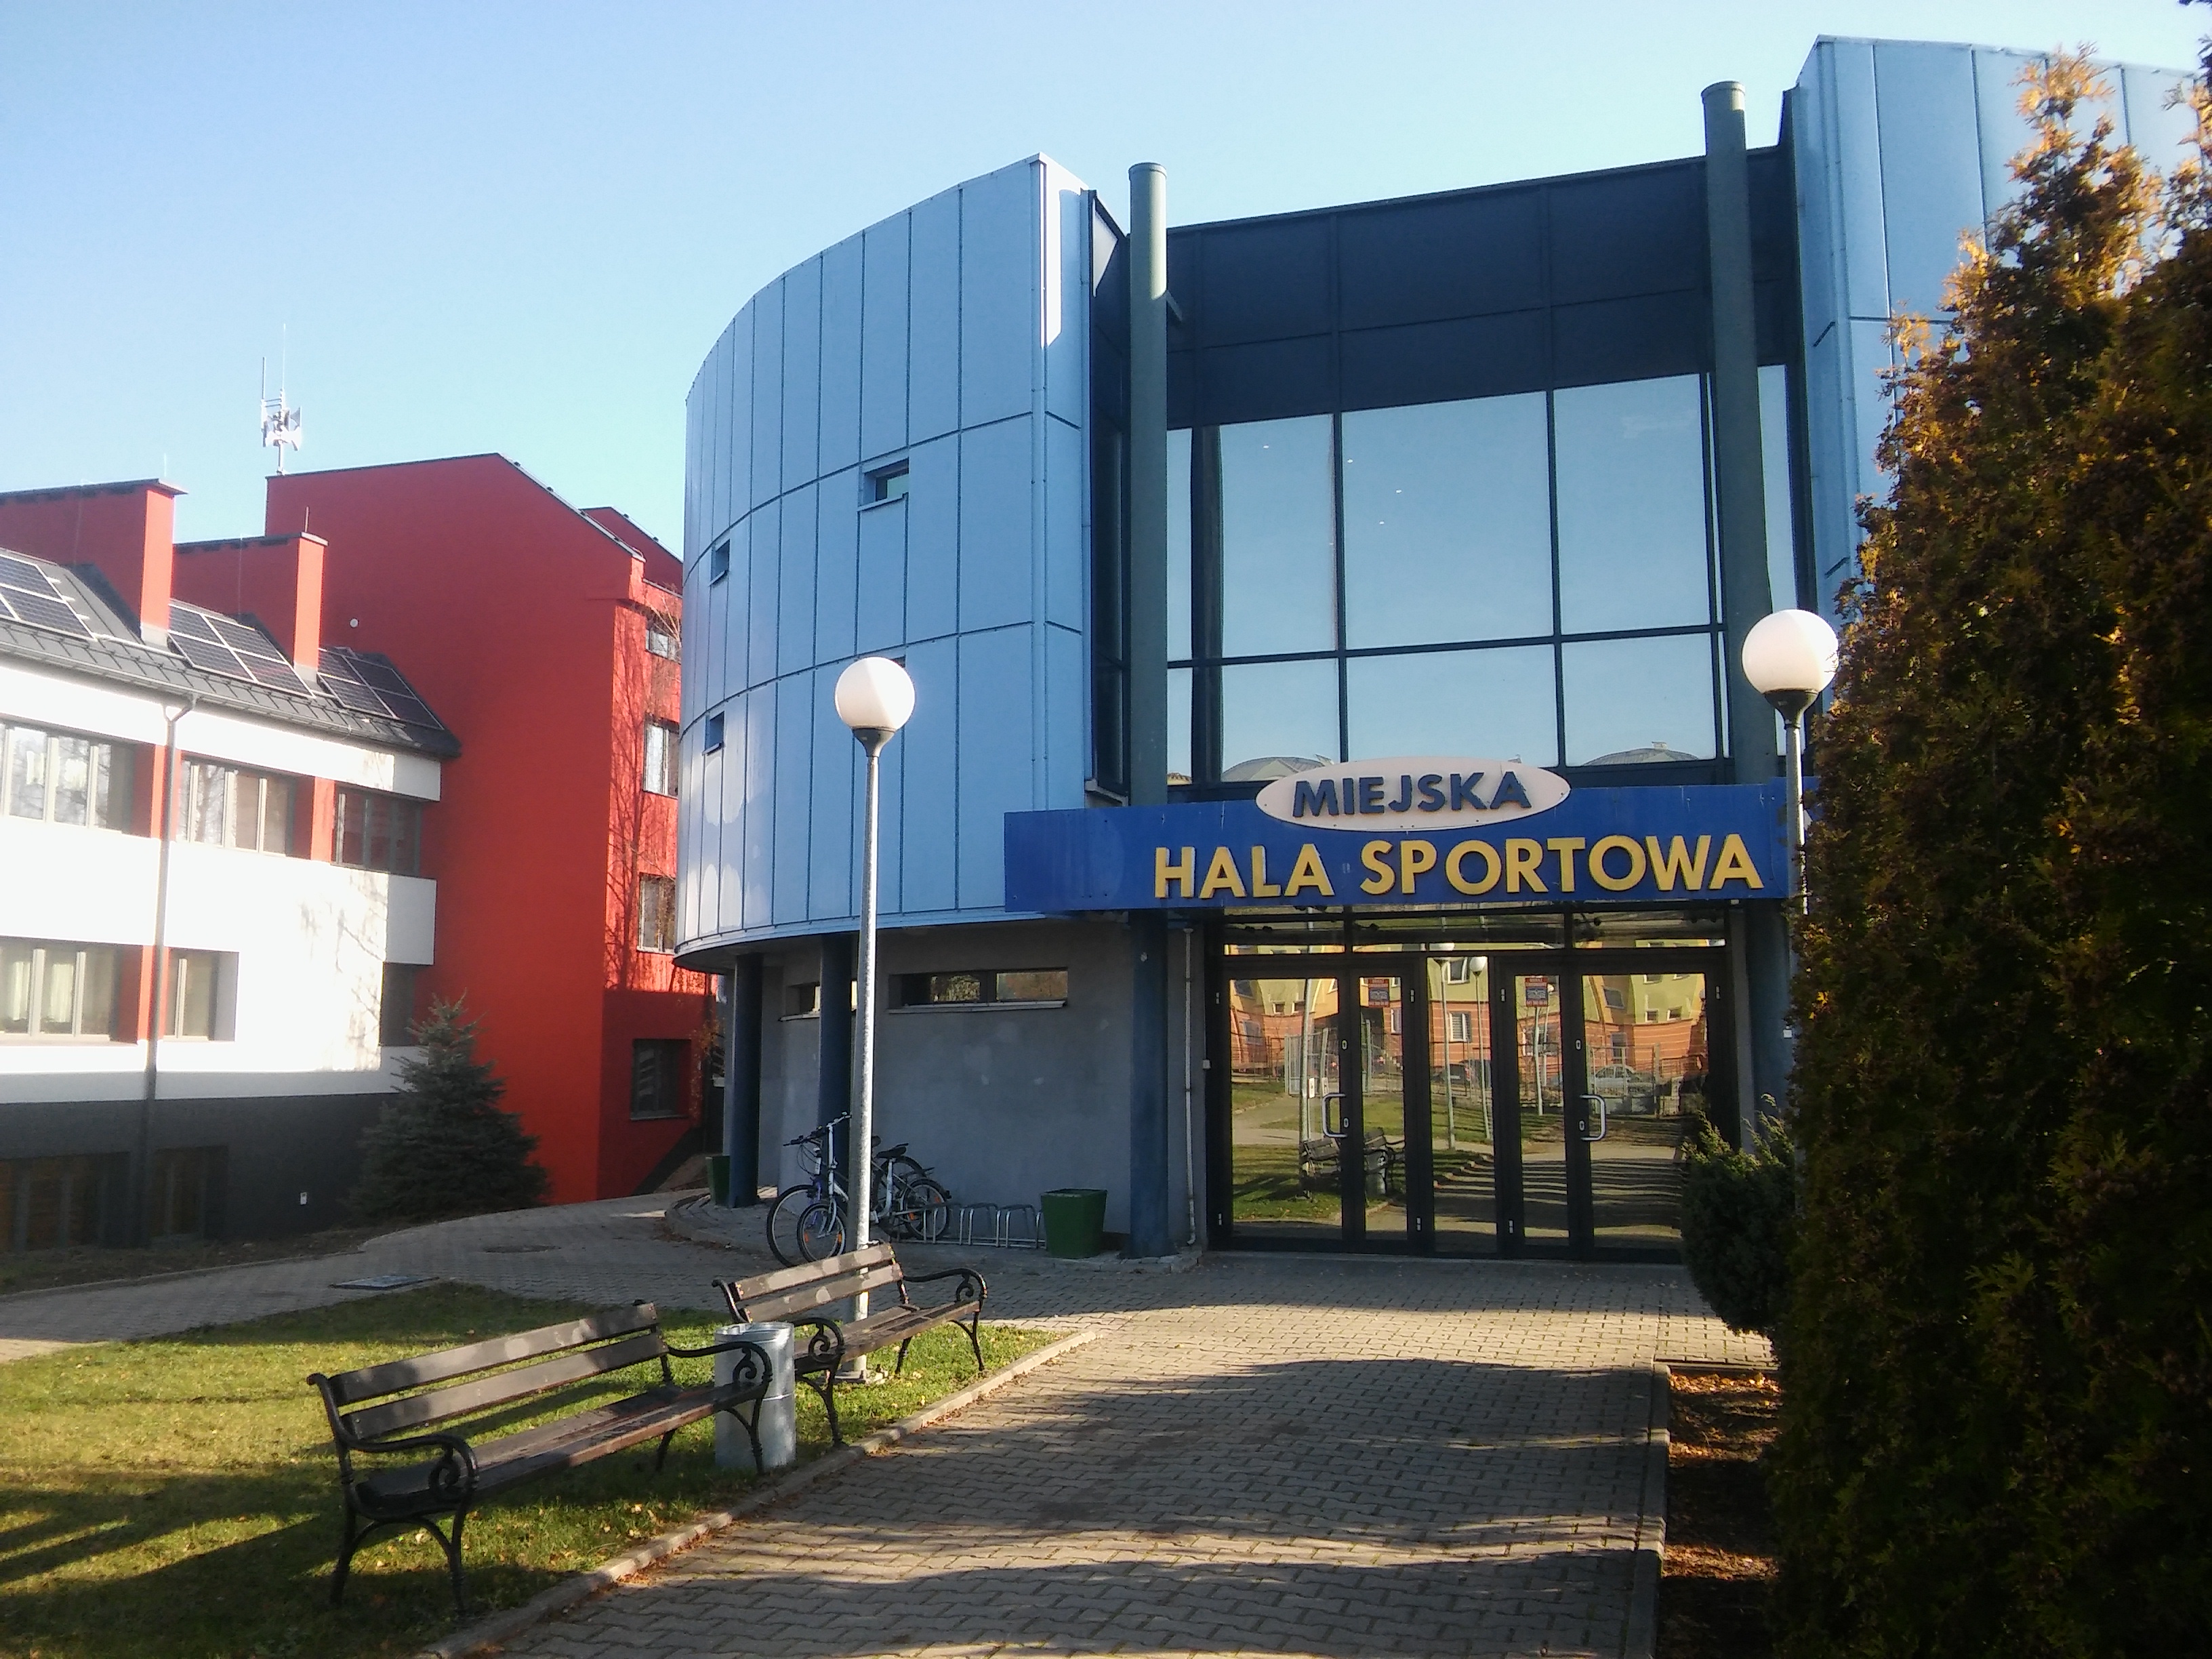 Miejska Hala Sportowa images